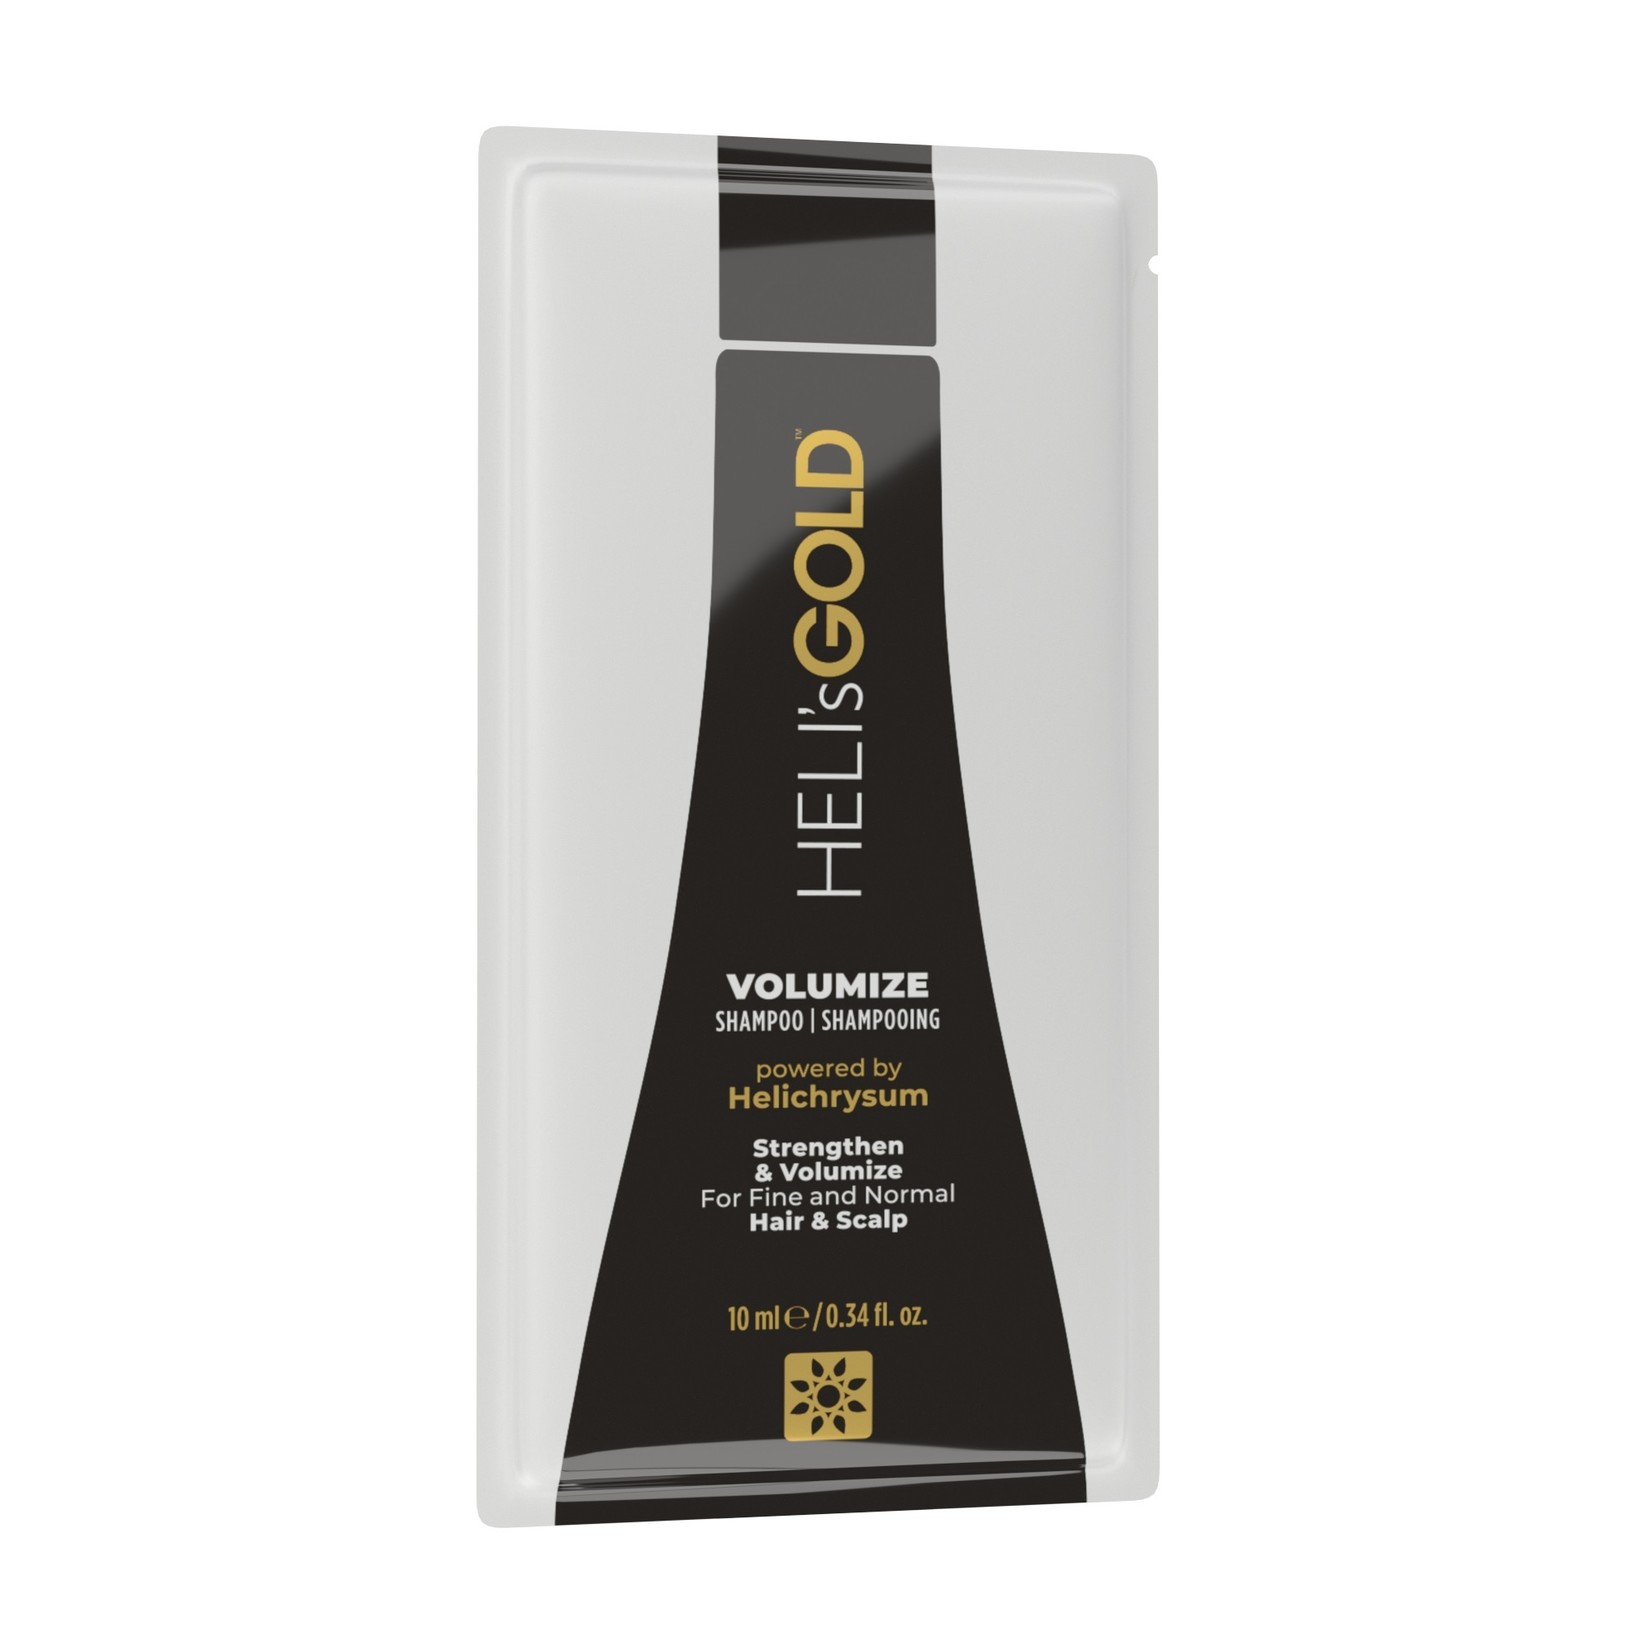 Heli's Gold Volumize Shampoo Packet 10 ml